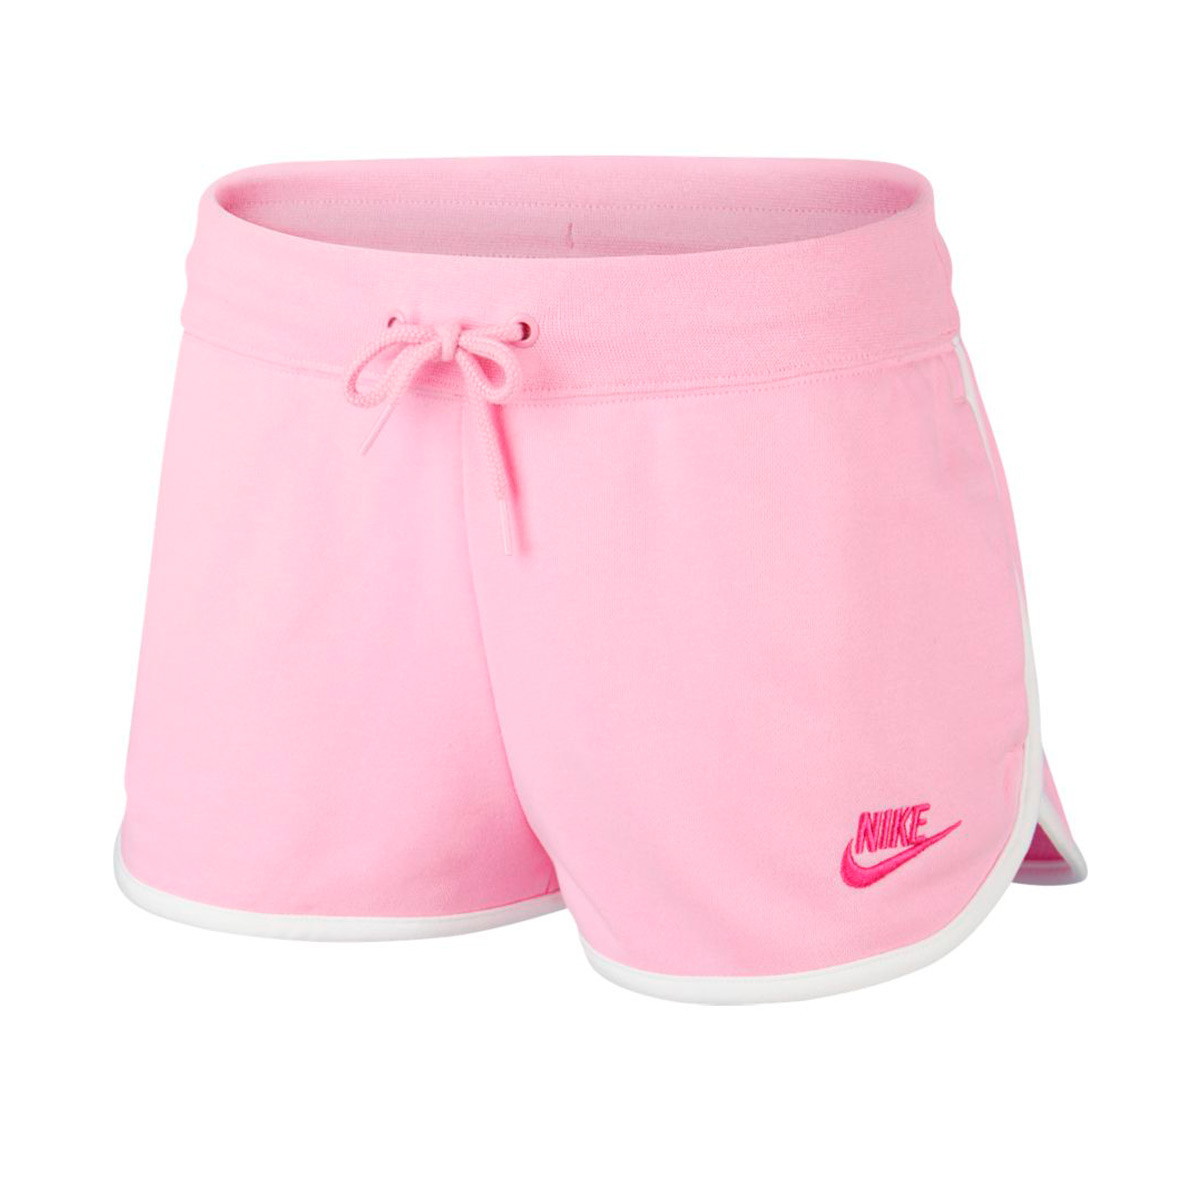 fire pink nike shorts